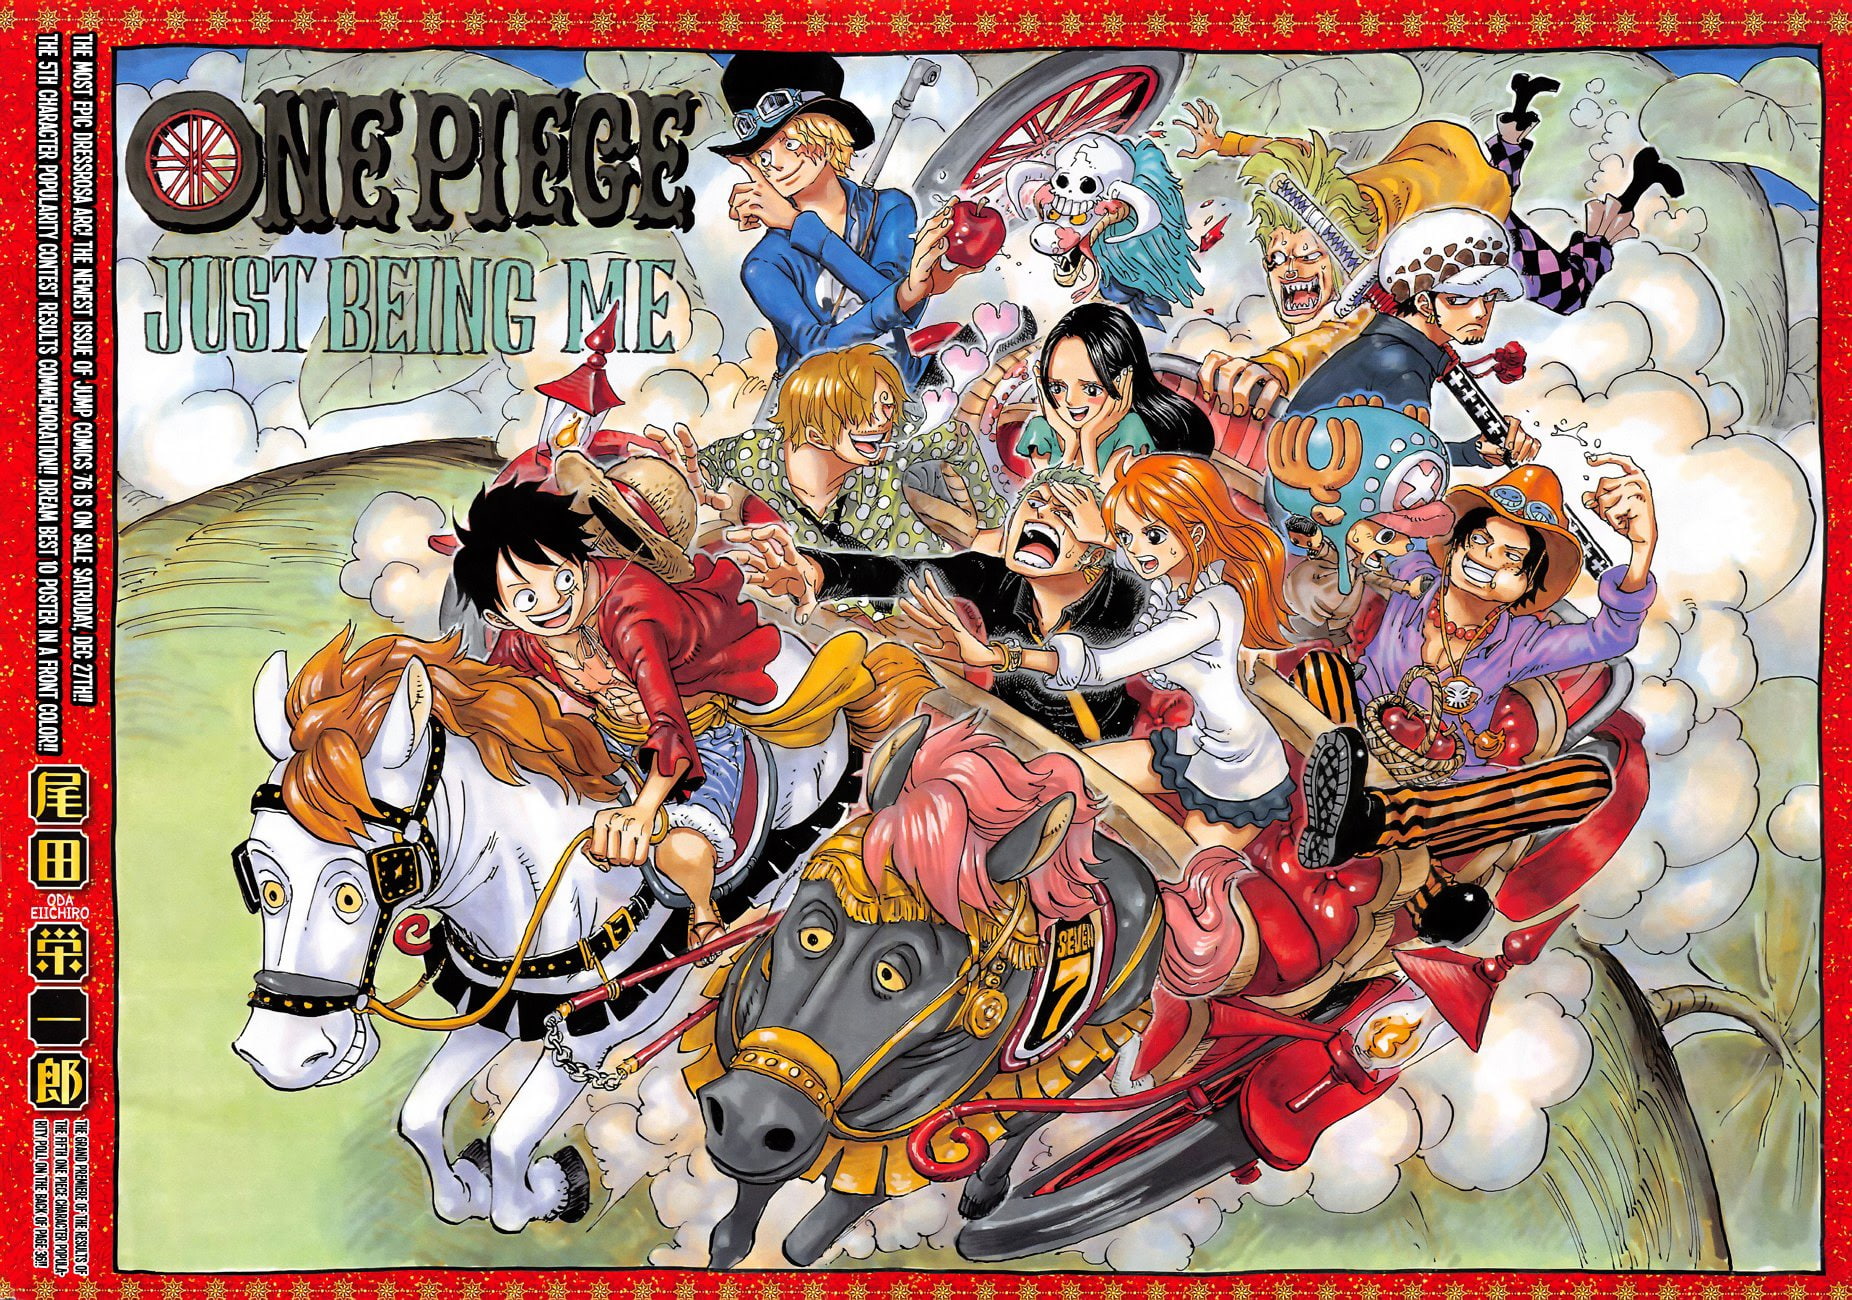 Nami One Piece Wallpaper , HD Wallpaper & Backgrounds